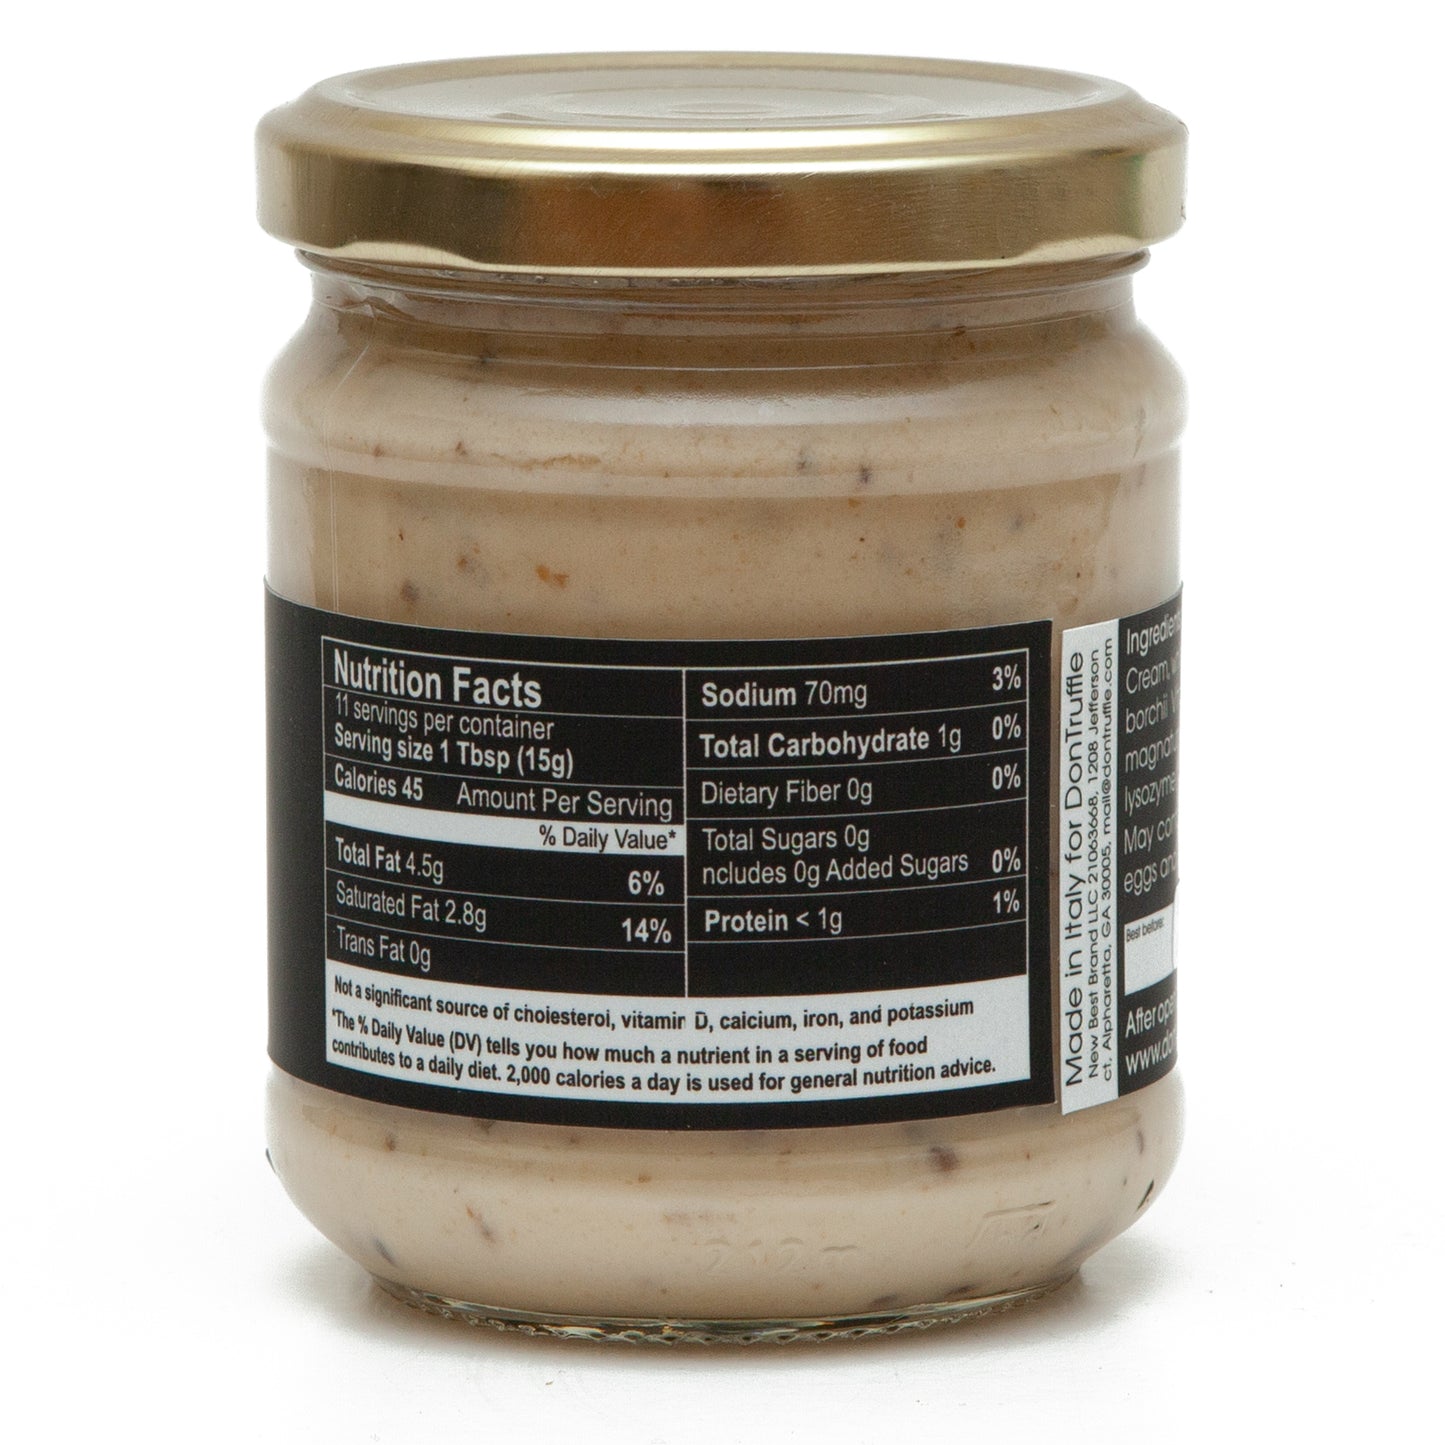 White truffle sauce 5,9 OZ (170g)